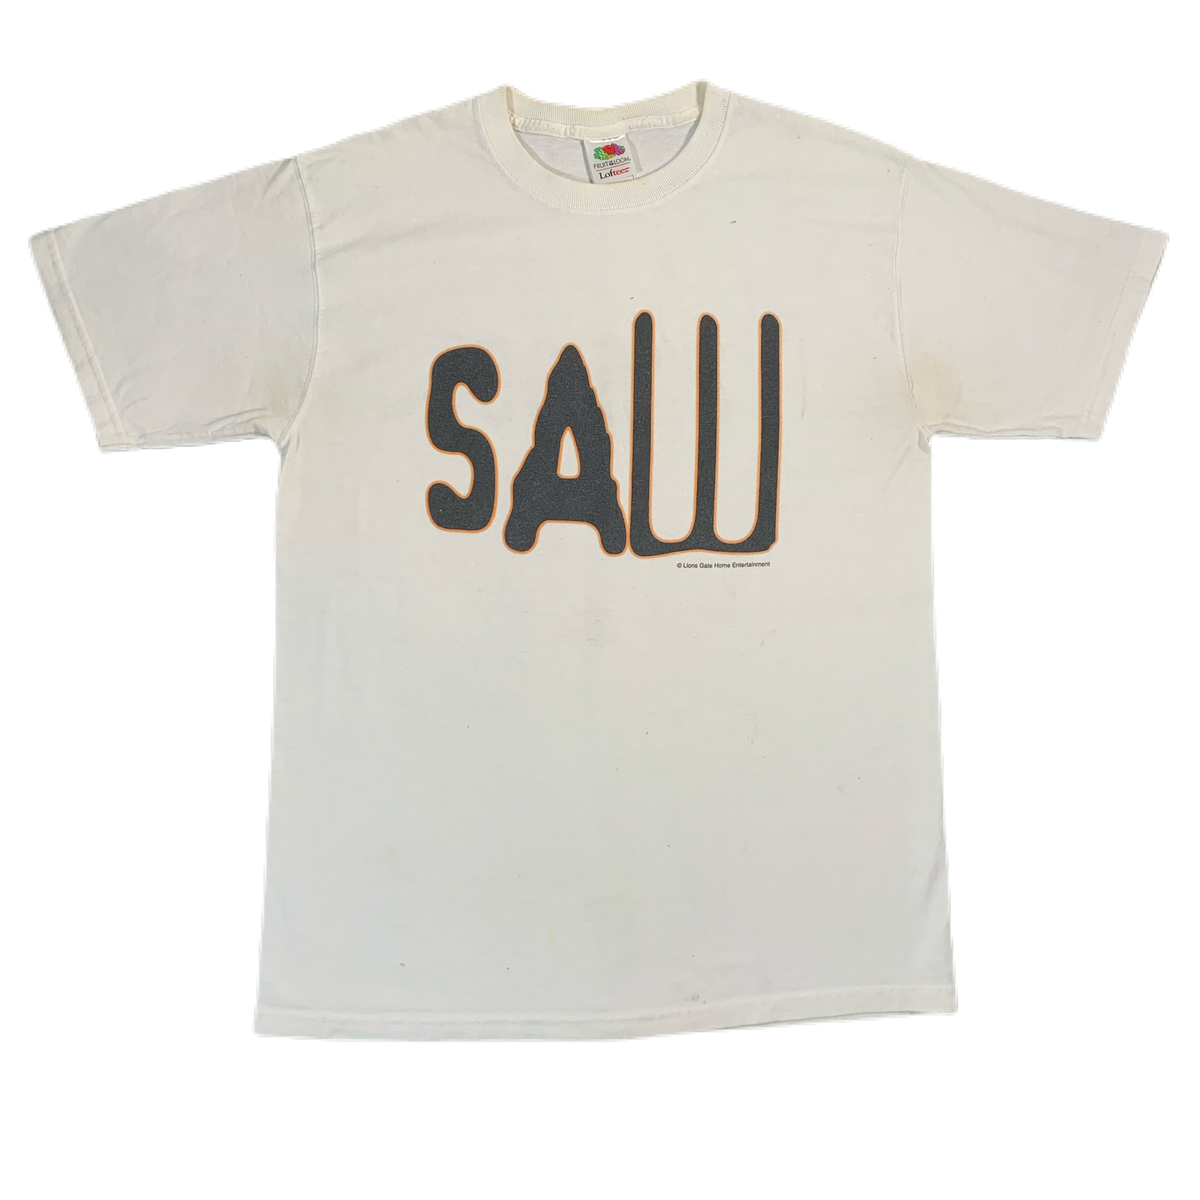 Vintage SAW “2.15.05” T-Shirt - jointcustodydc